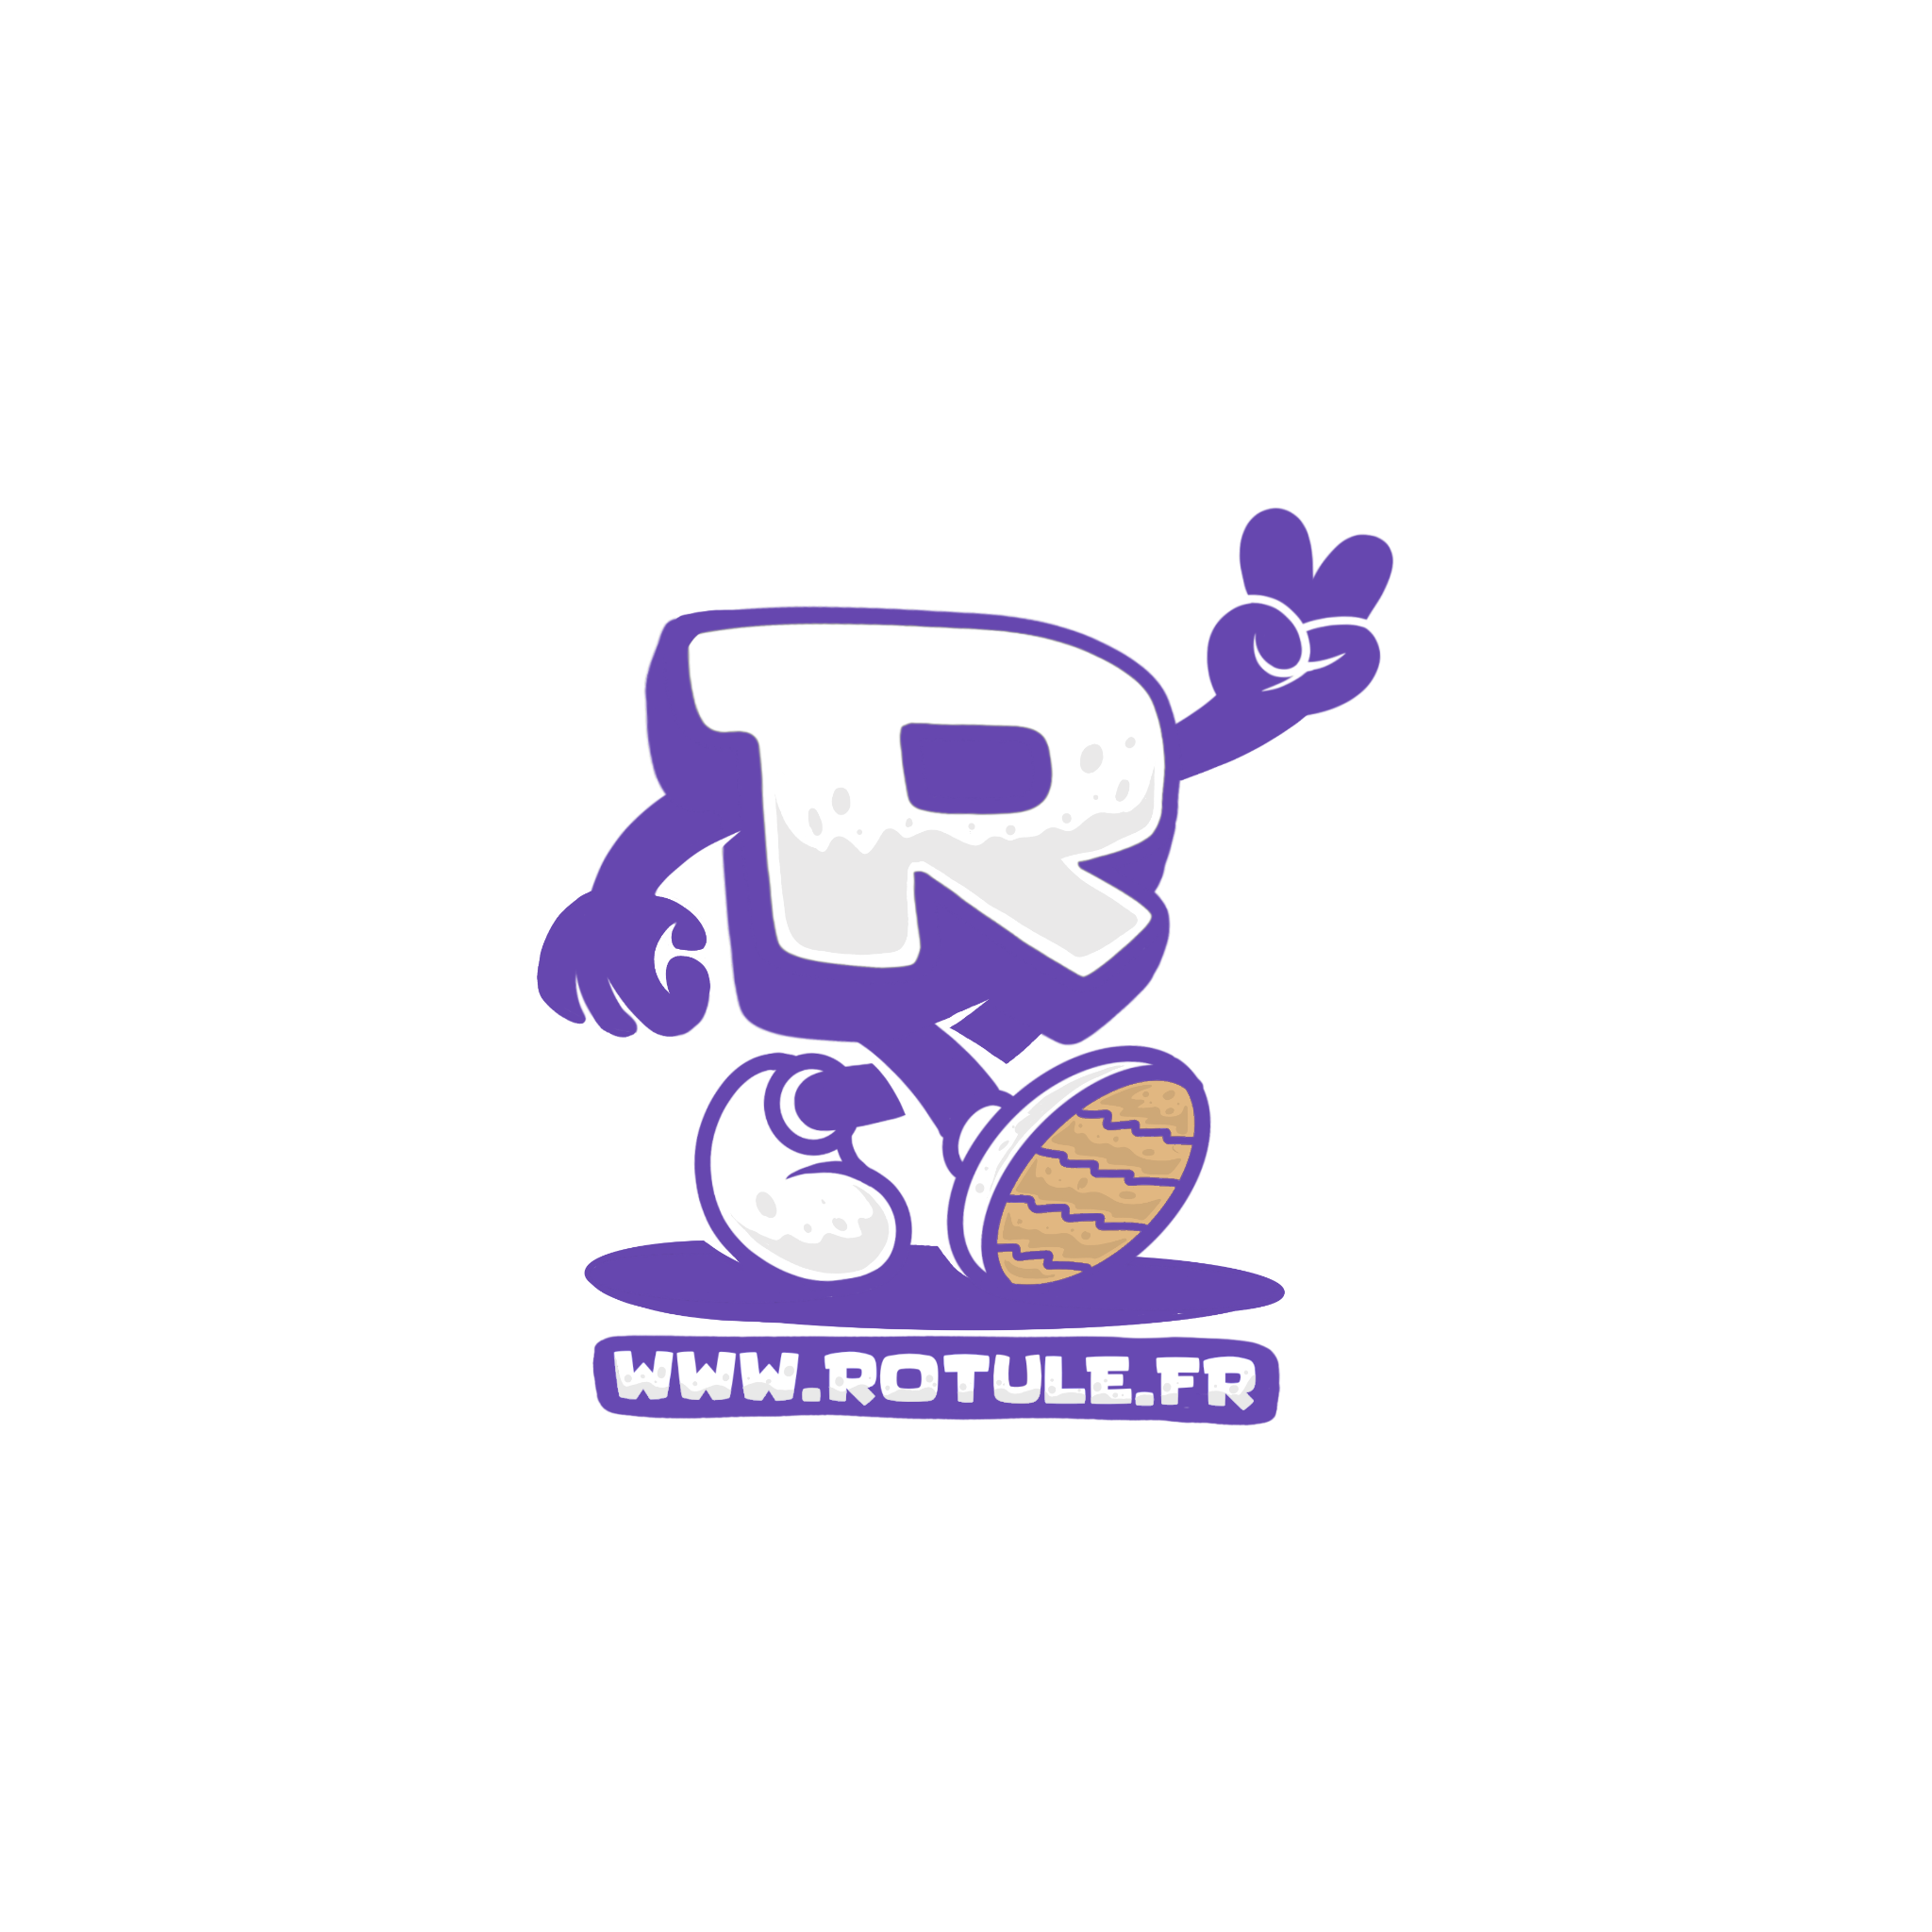 rotule.fr_mascot_header_creation_video_rouen